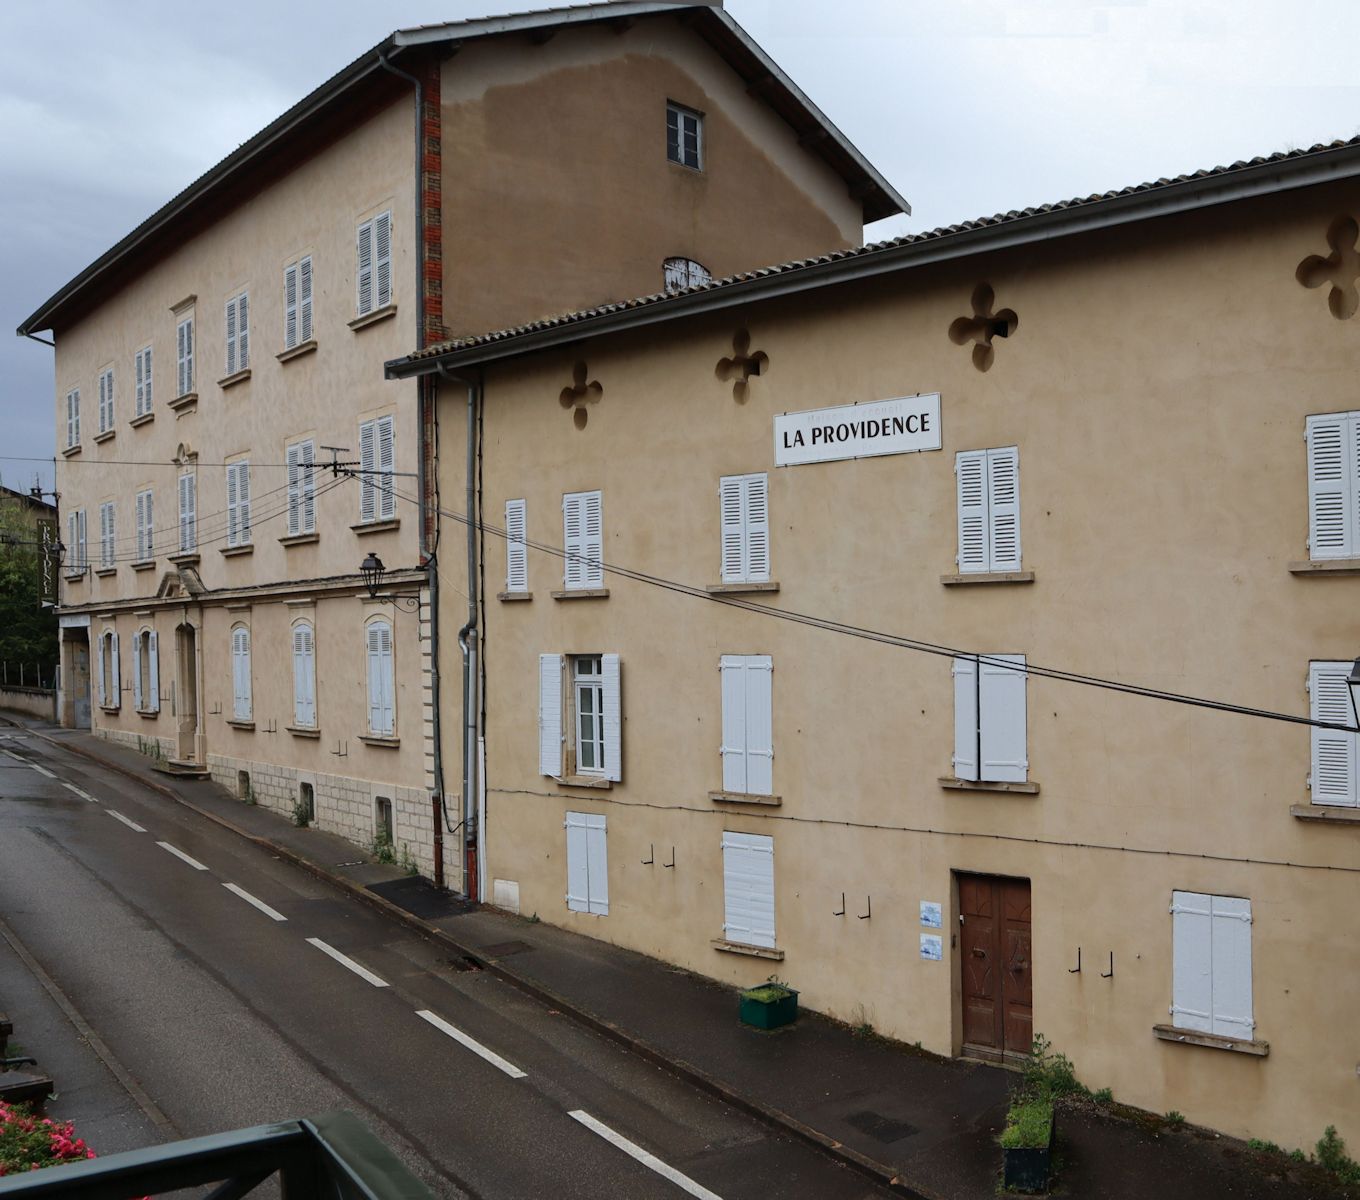 Mädchenschule und Internat „La Providence” in Ars-sur-Formans, heute Pilgerherberge